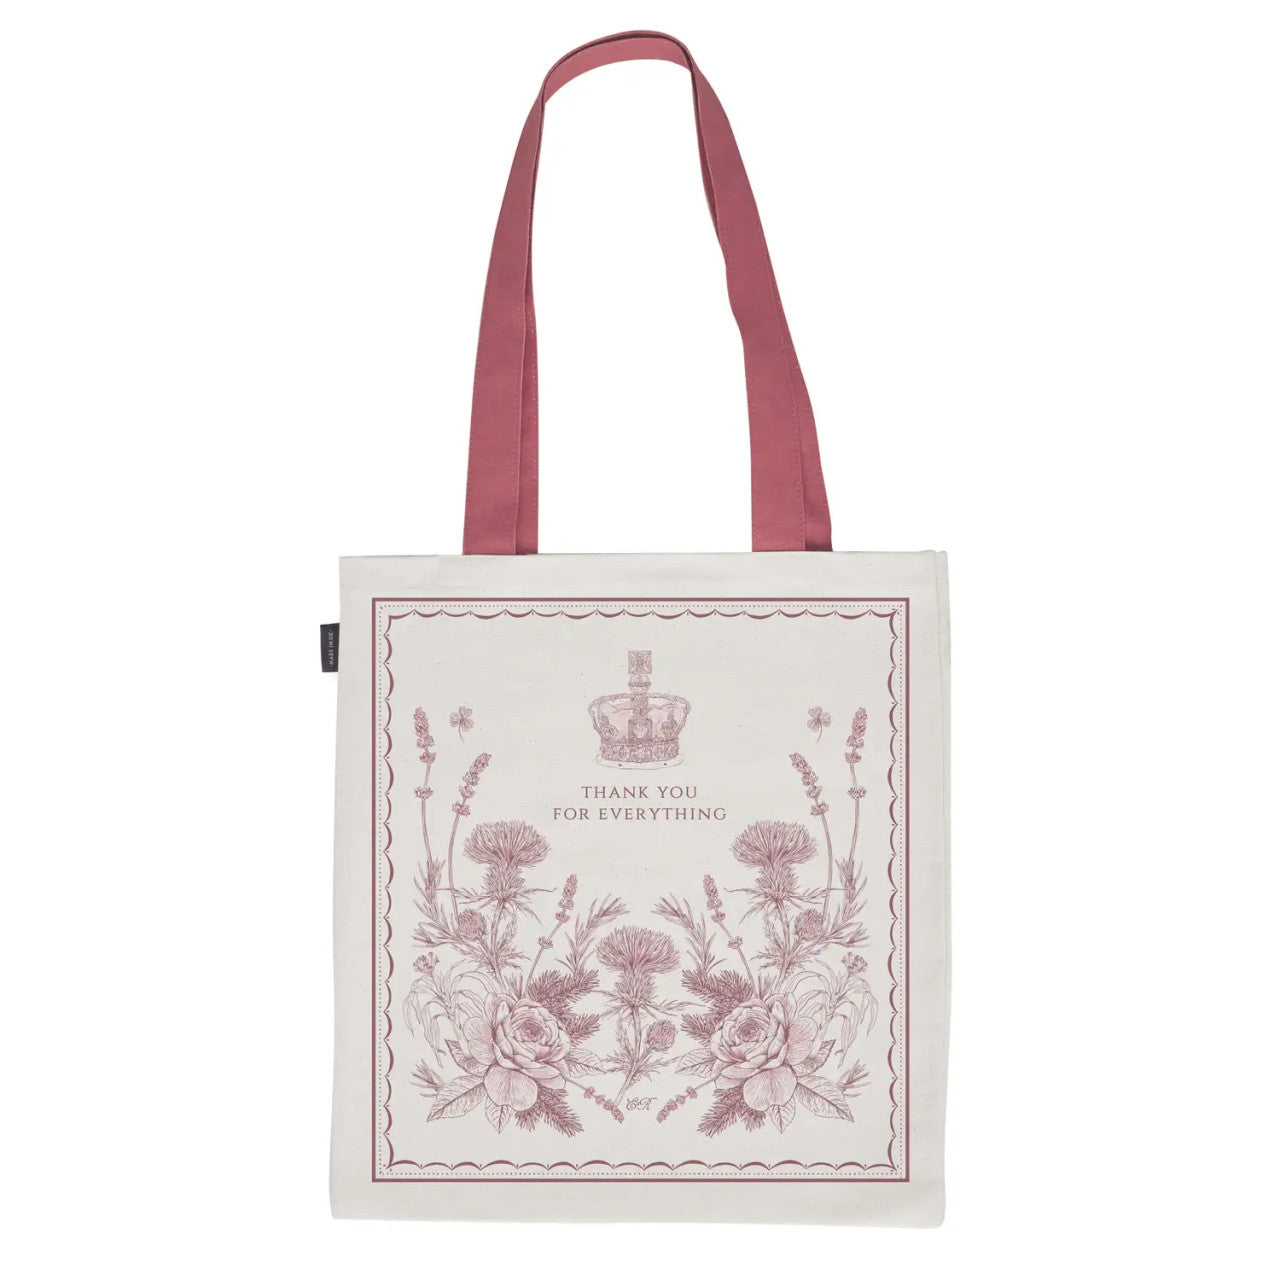 Queen Elizabeth II Commemorative Canvas bag from Victoria Eggs. 